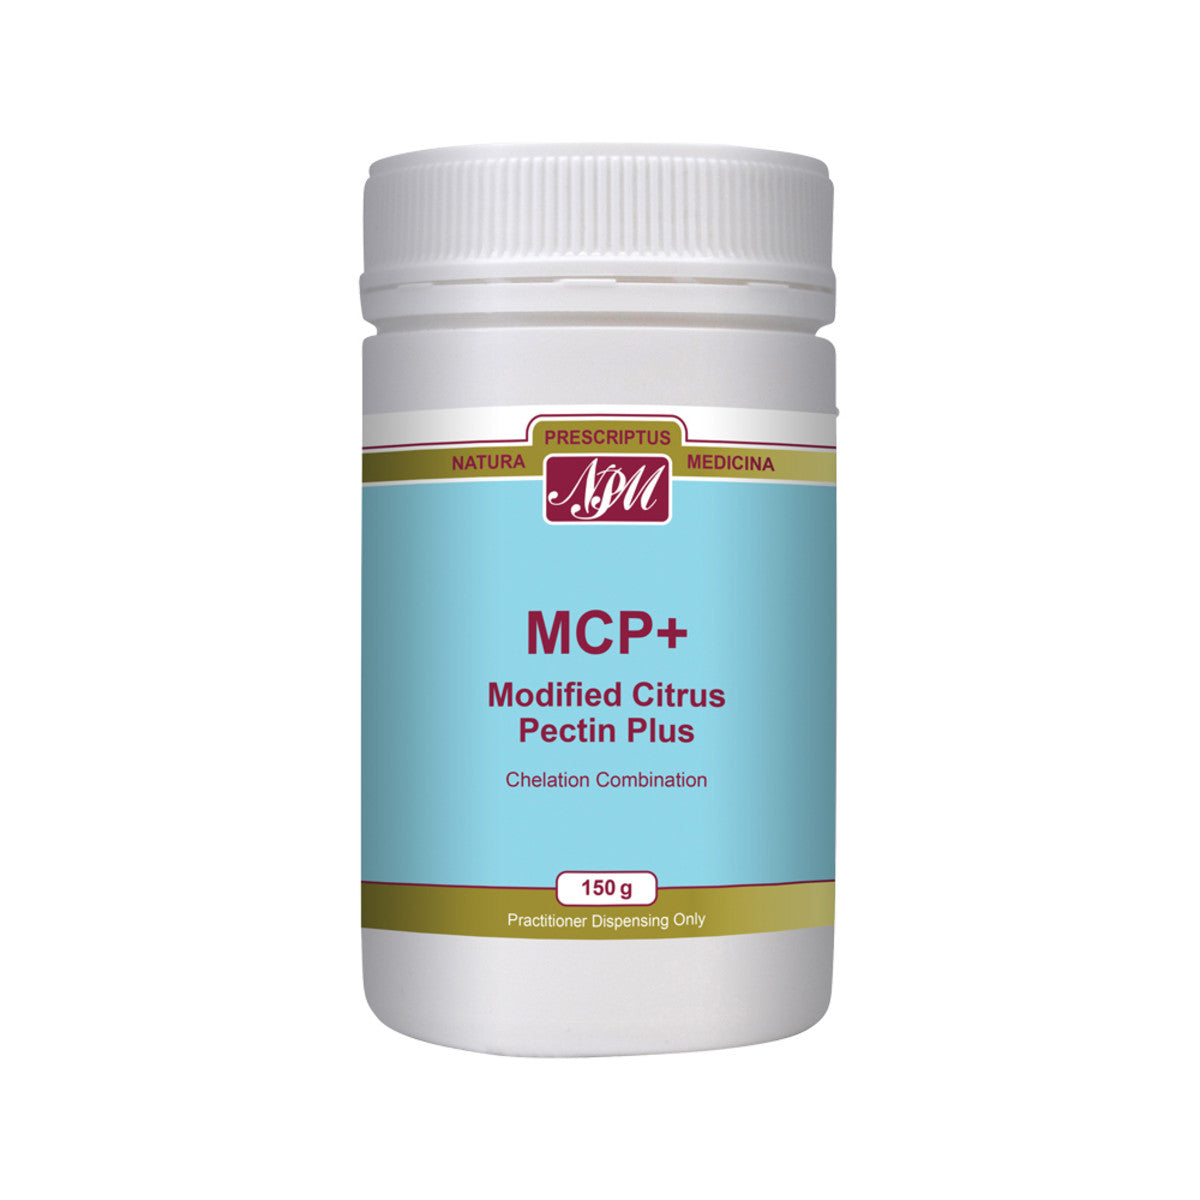 NPM MCP Plus (Modified Citrus Pectin Plus) 150g